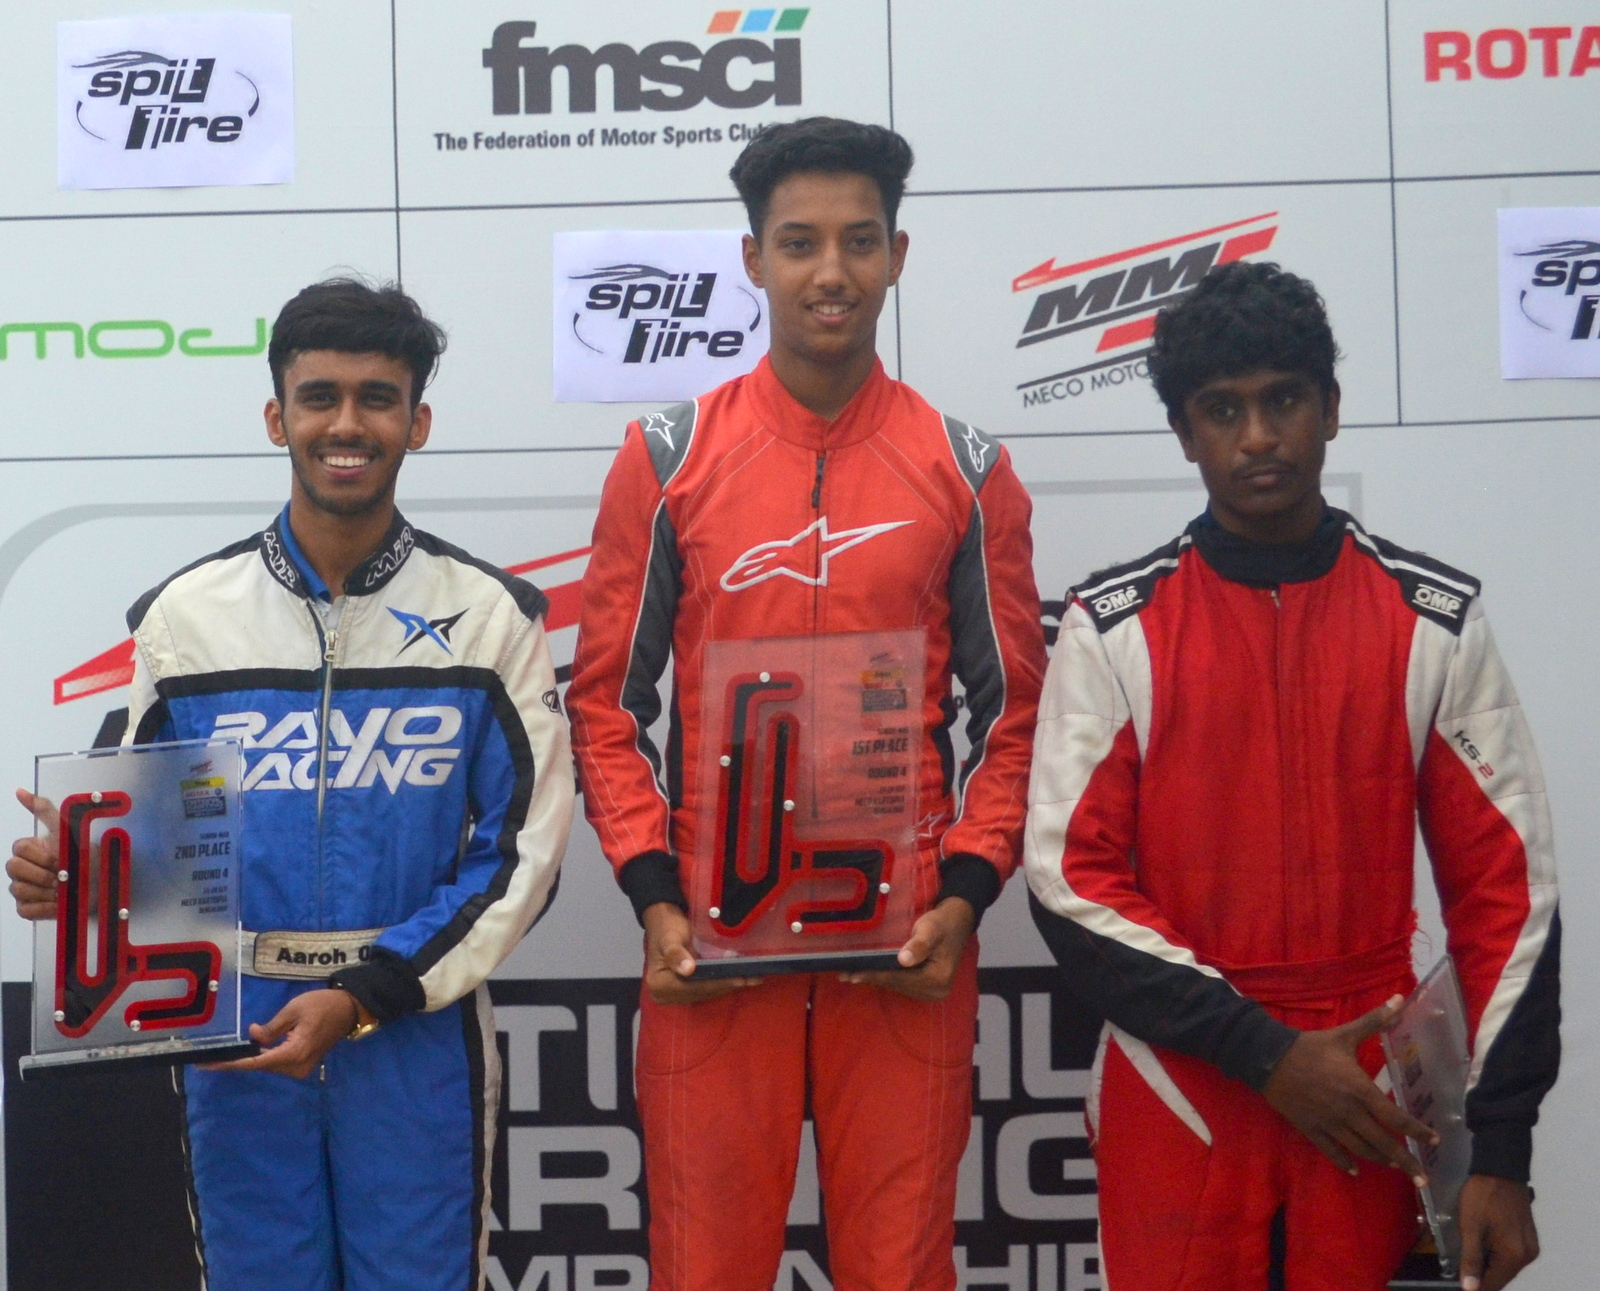 Rayo Racing's Aaroh Ravindra Extends Championship Lead